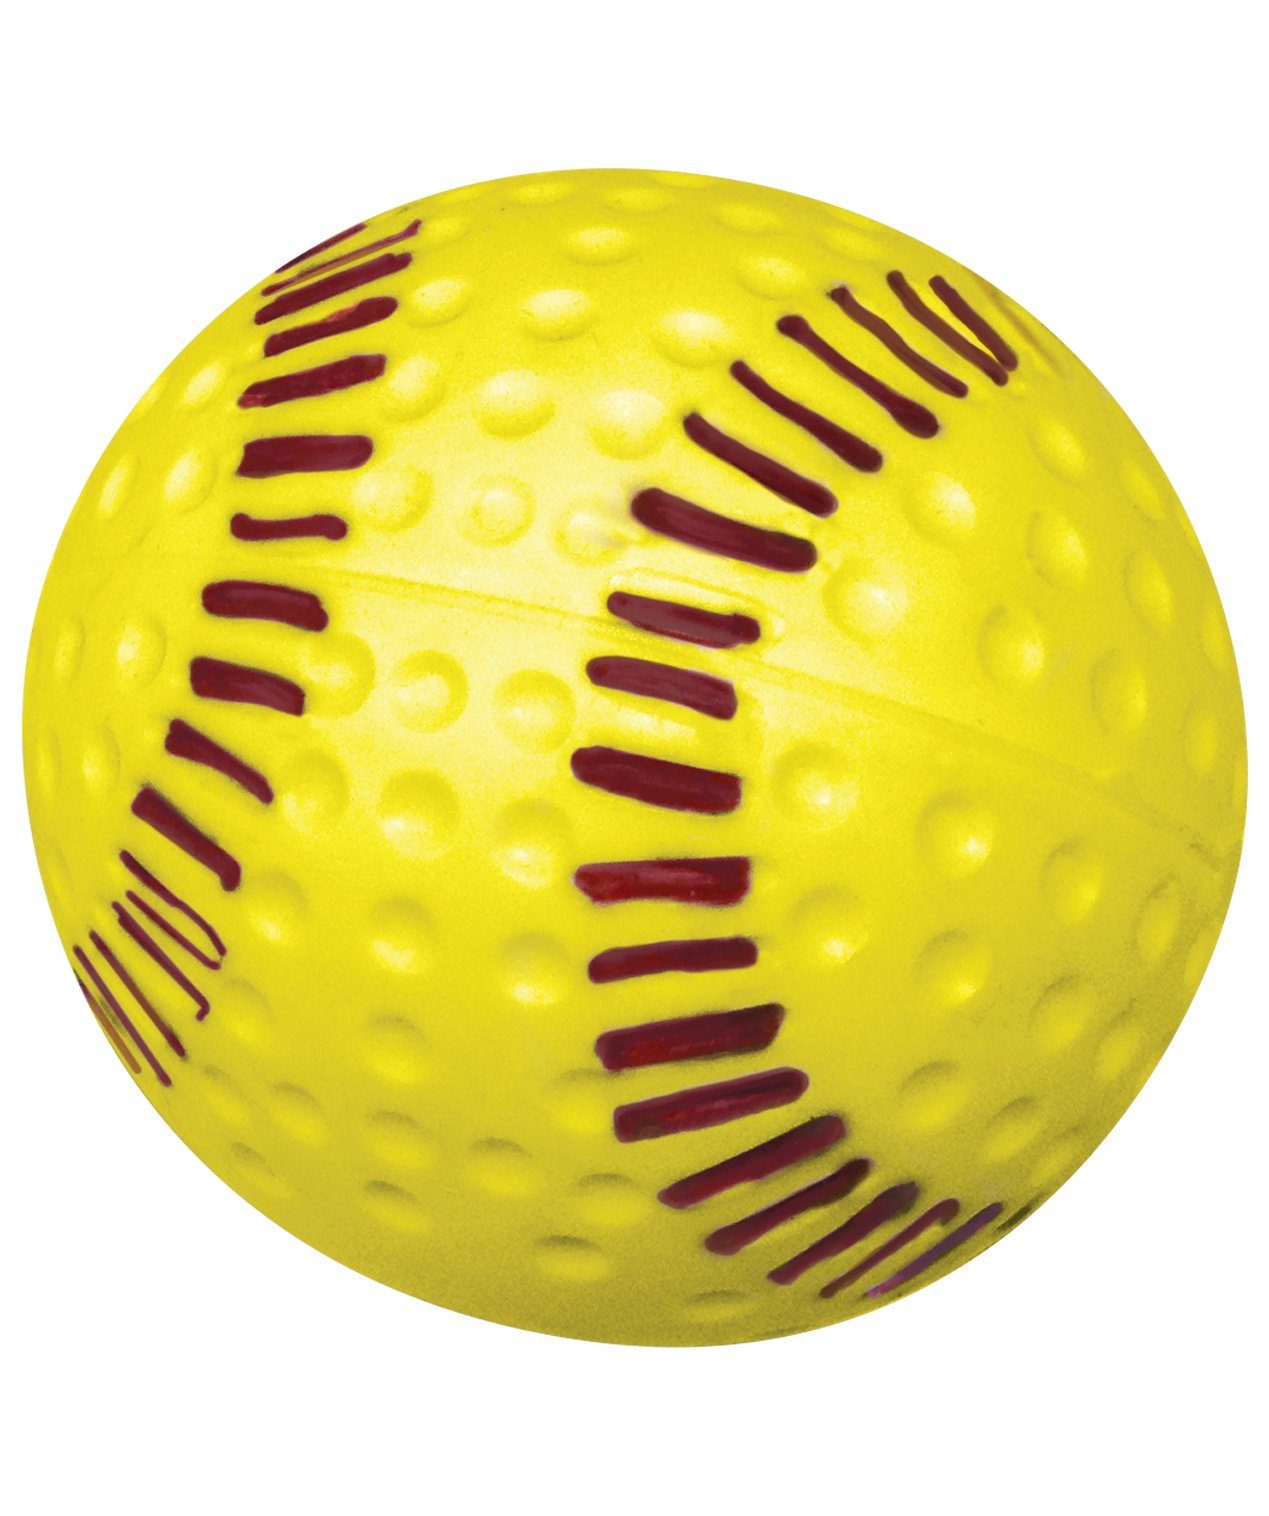 yellow dimpled seam pitching machine softballs with white background 